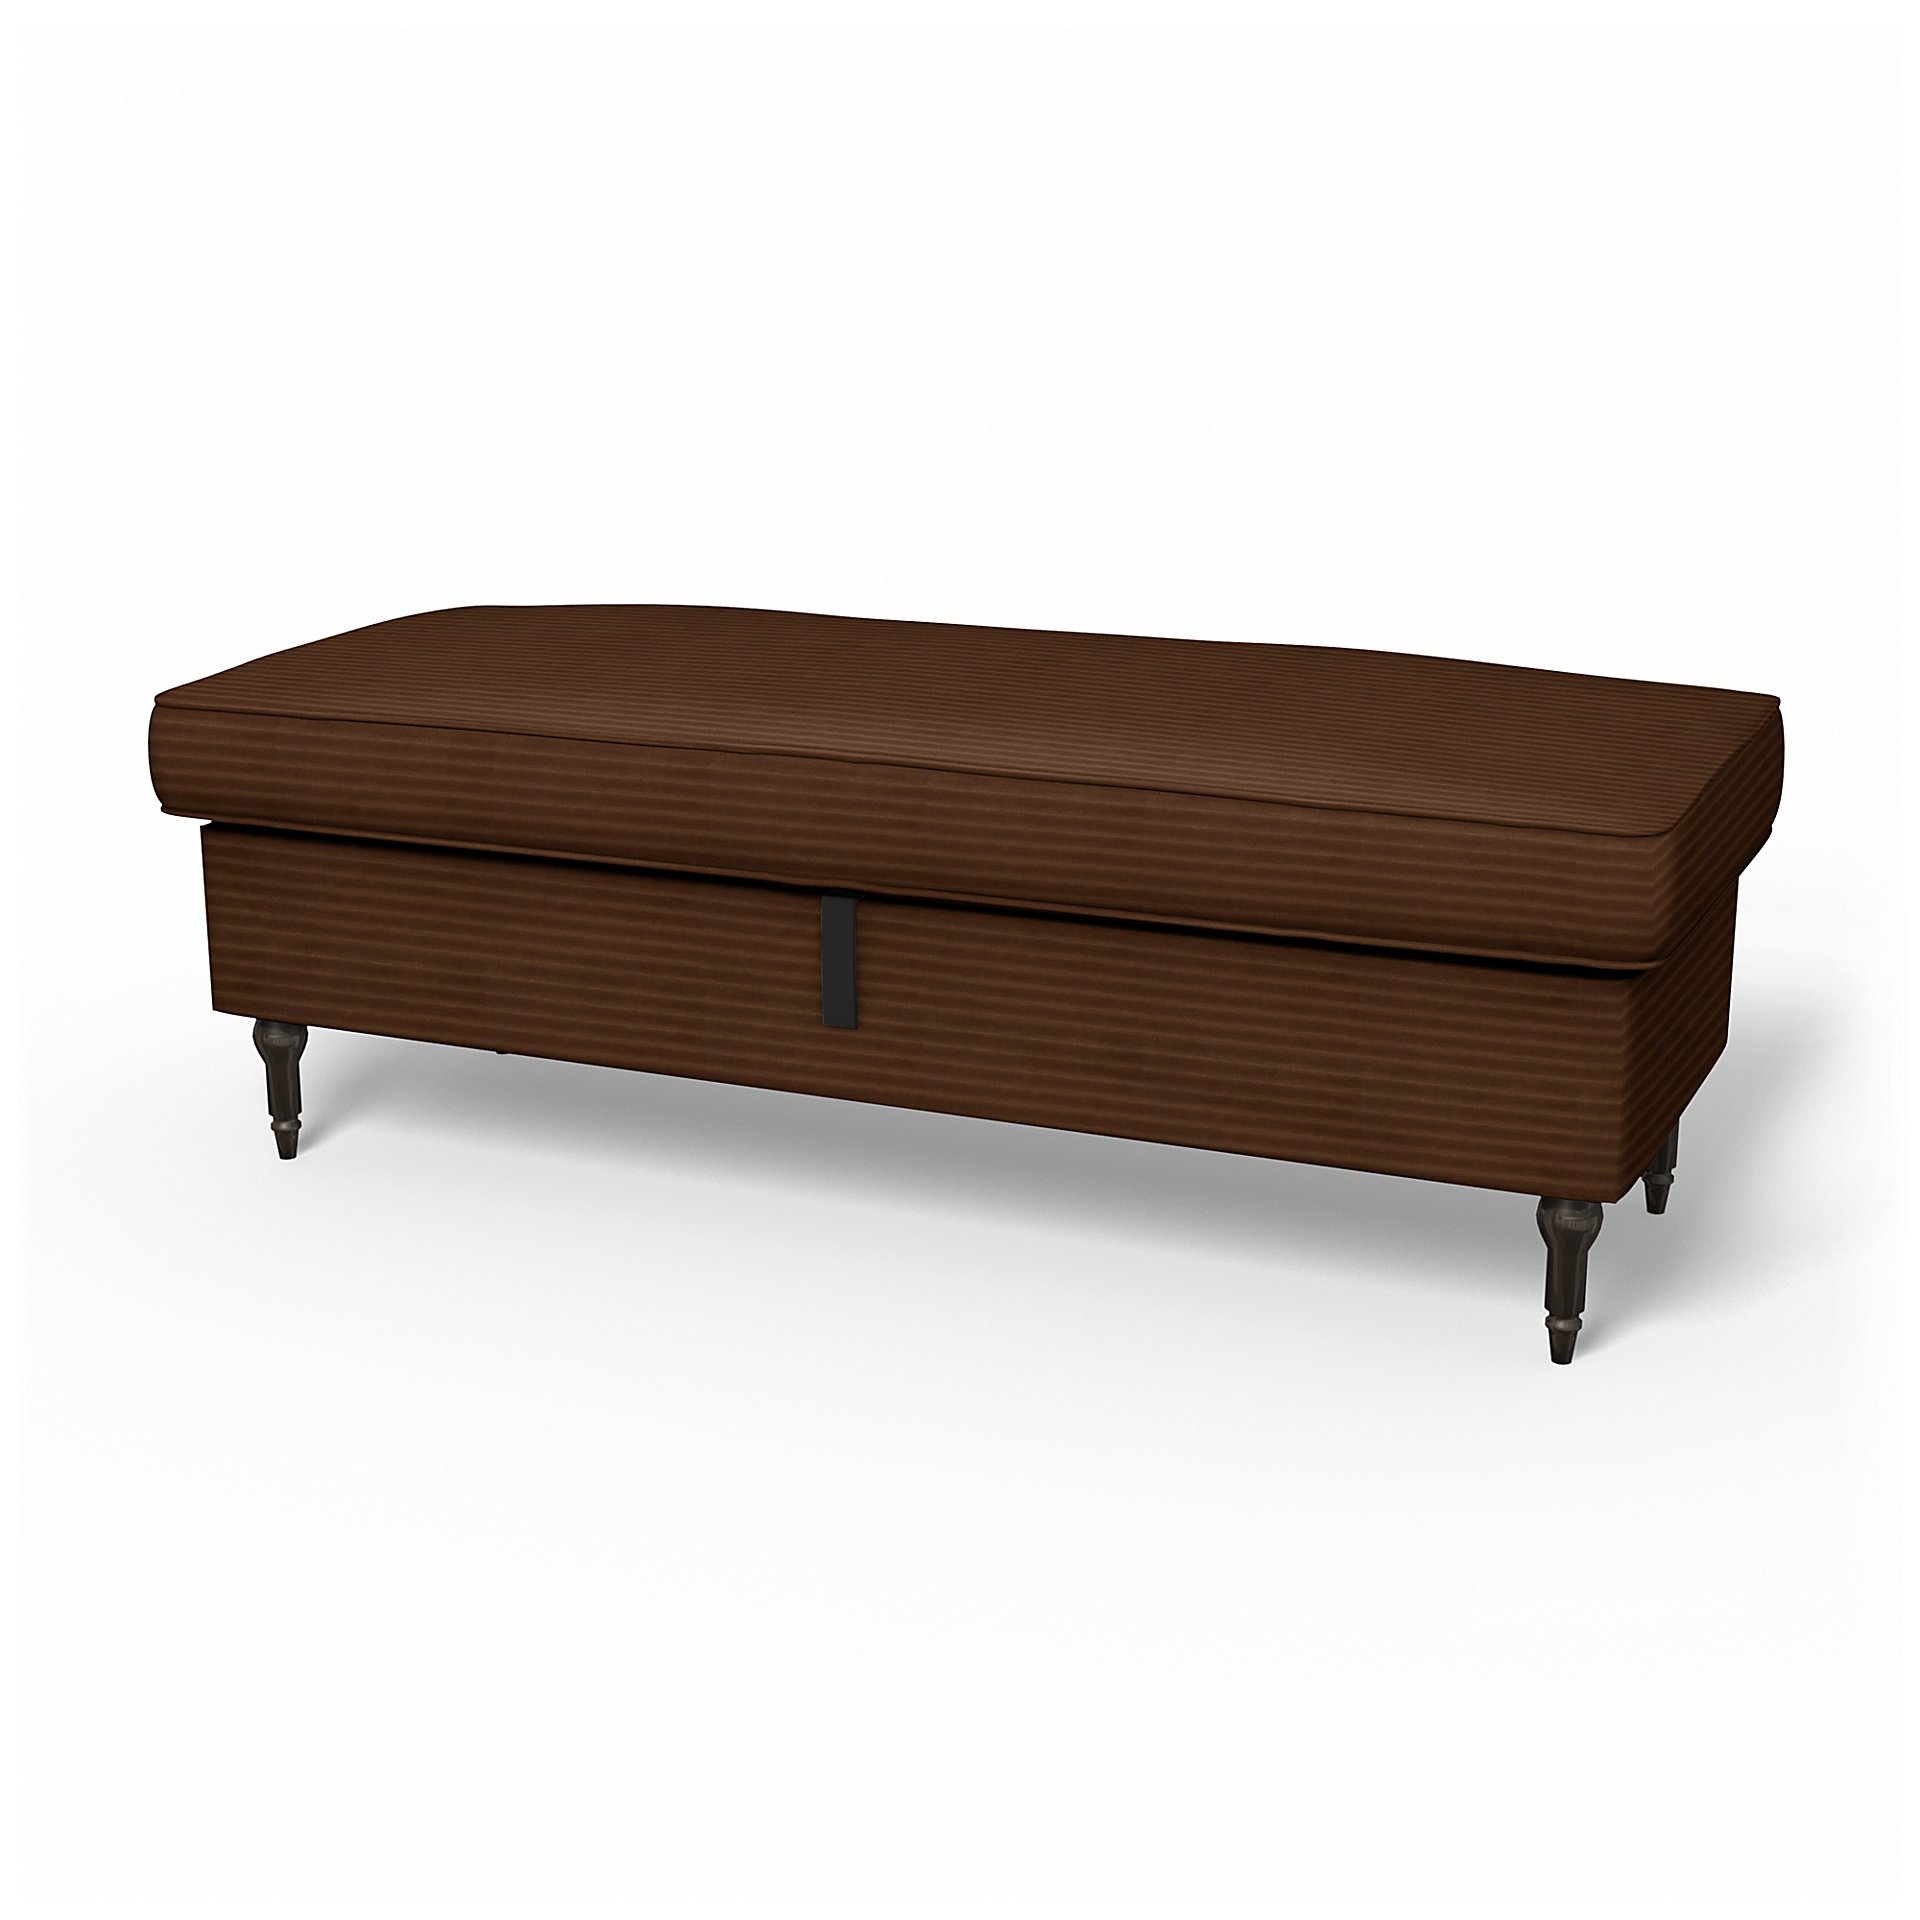 IKEA - Stocksund Bench Cover, Chocolate Brown, Corduroy - Bemz